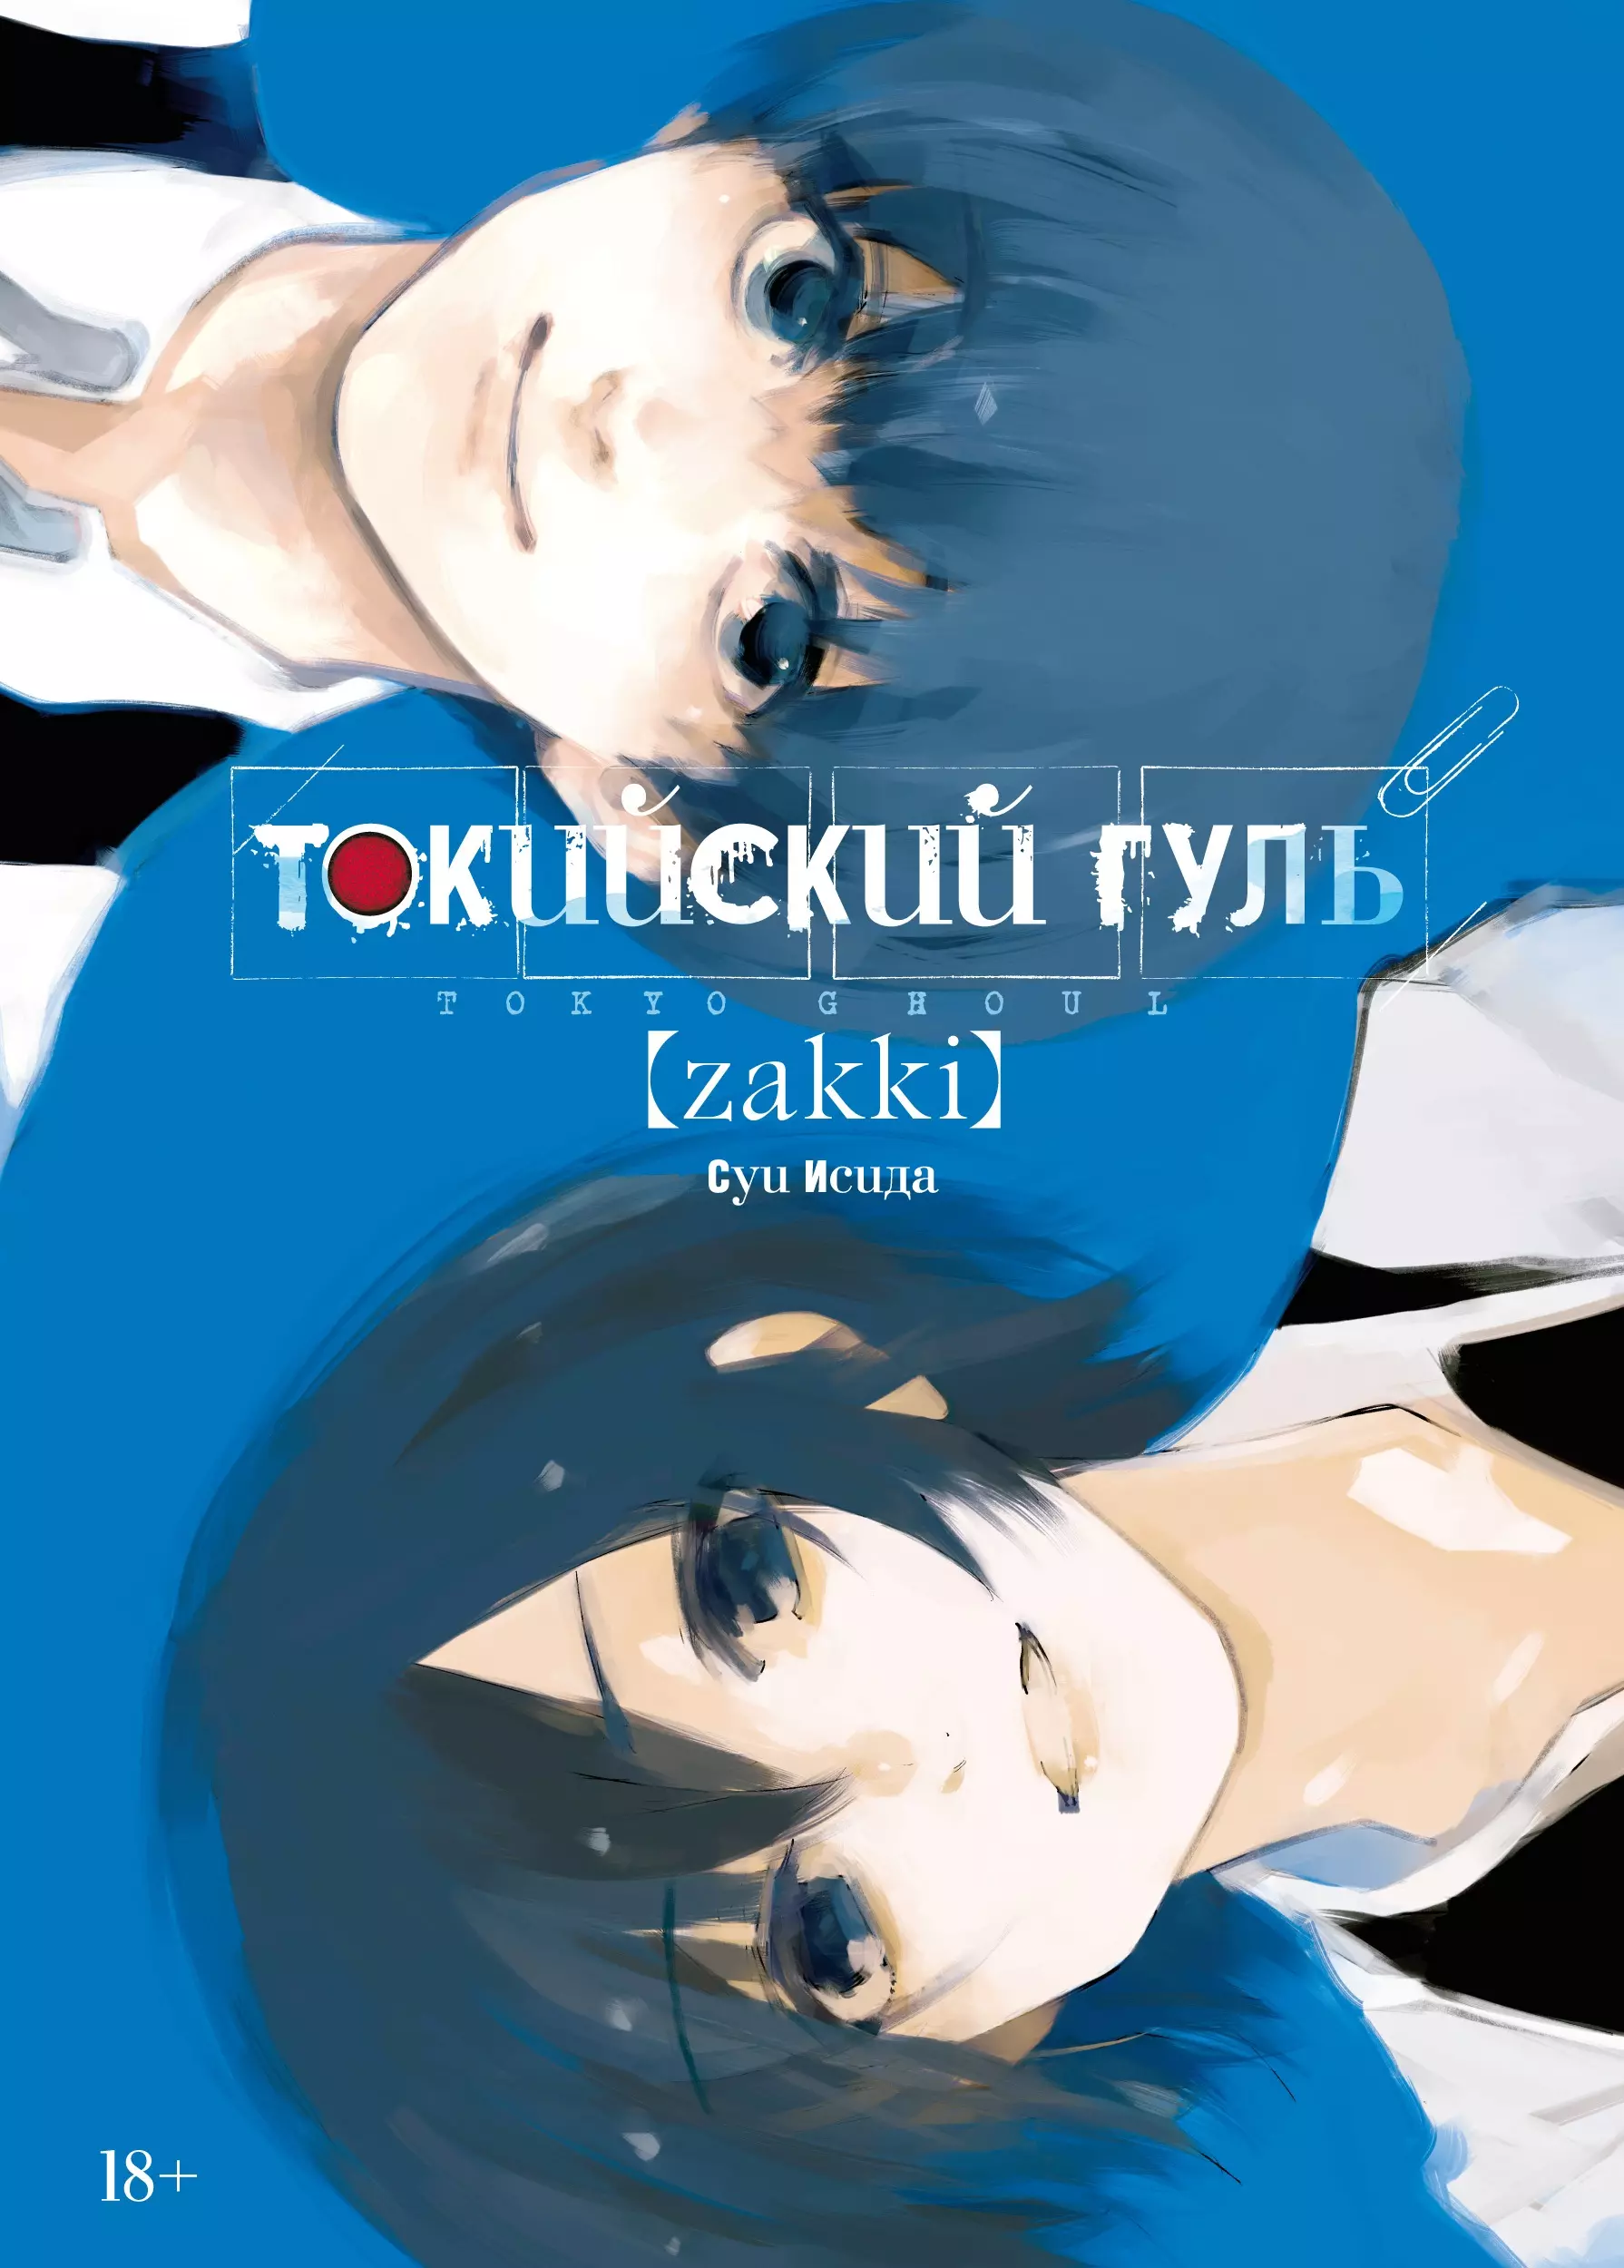 Токийский гуль: zakki манга токийский гуль книги 1–2 комплект книг